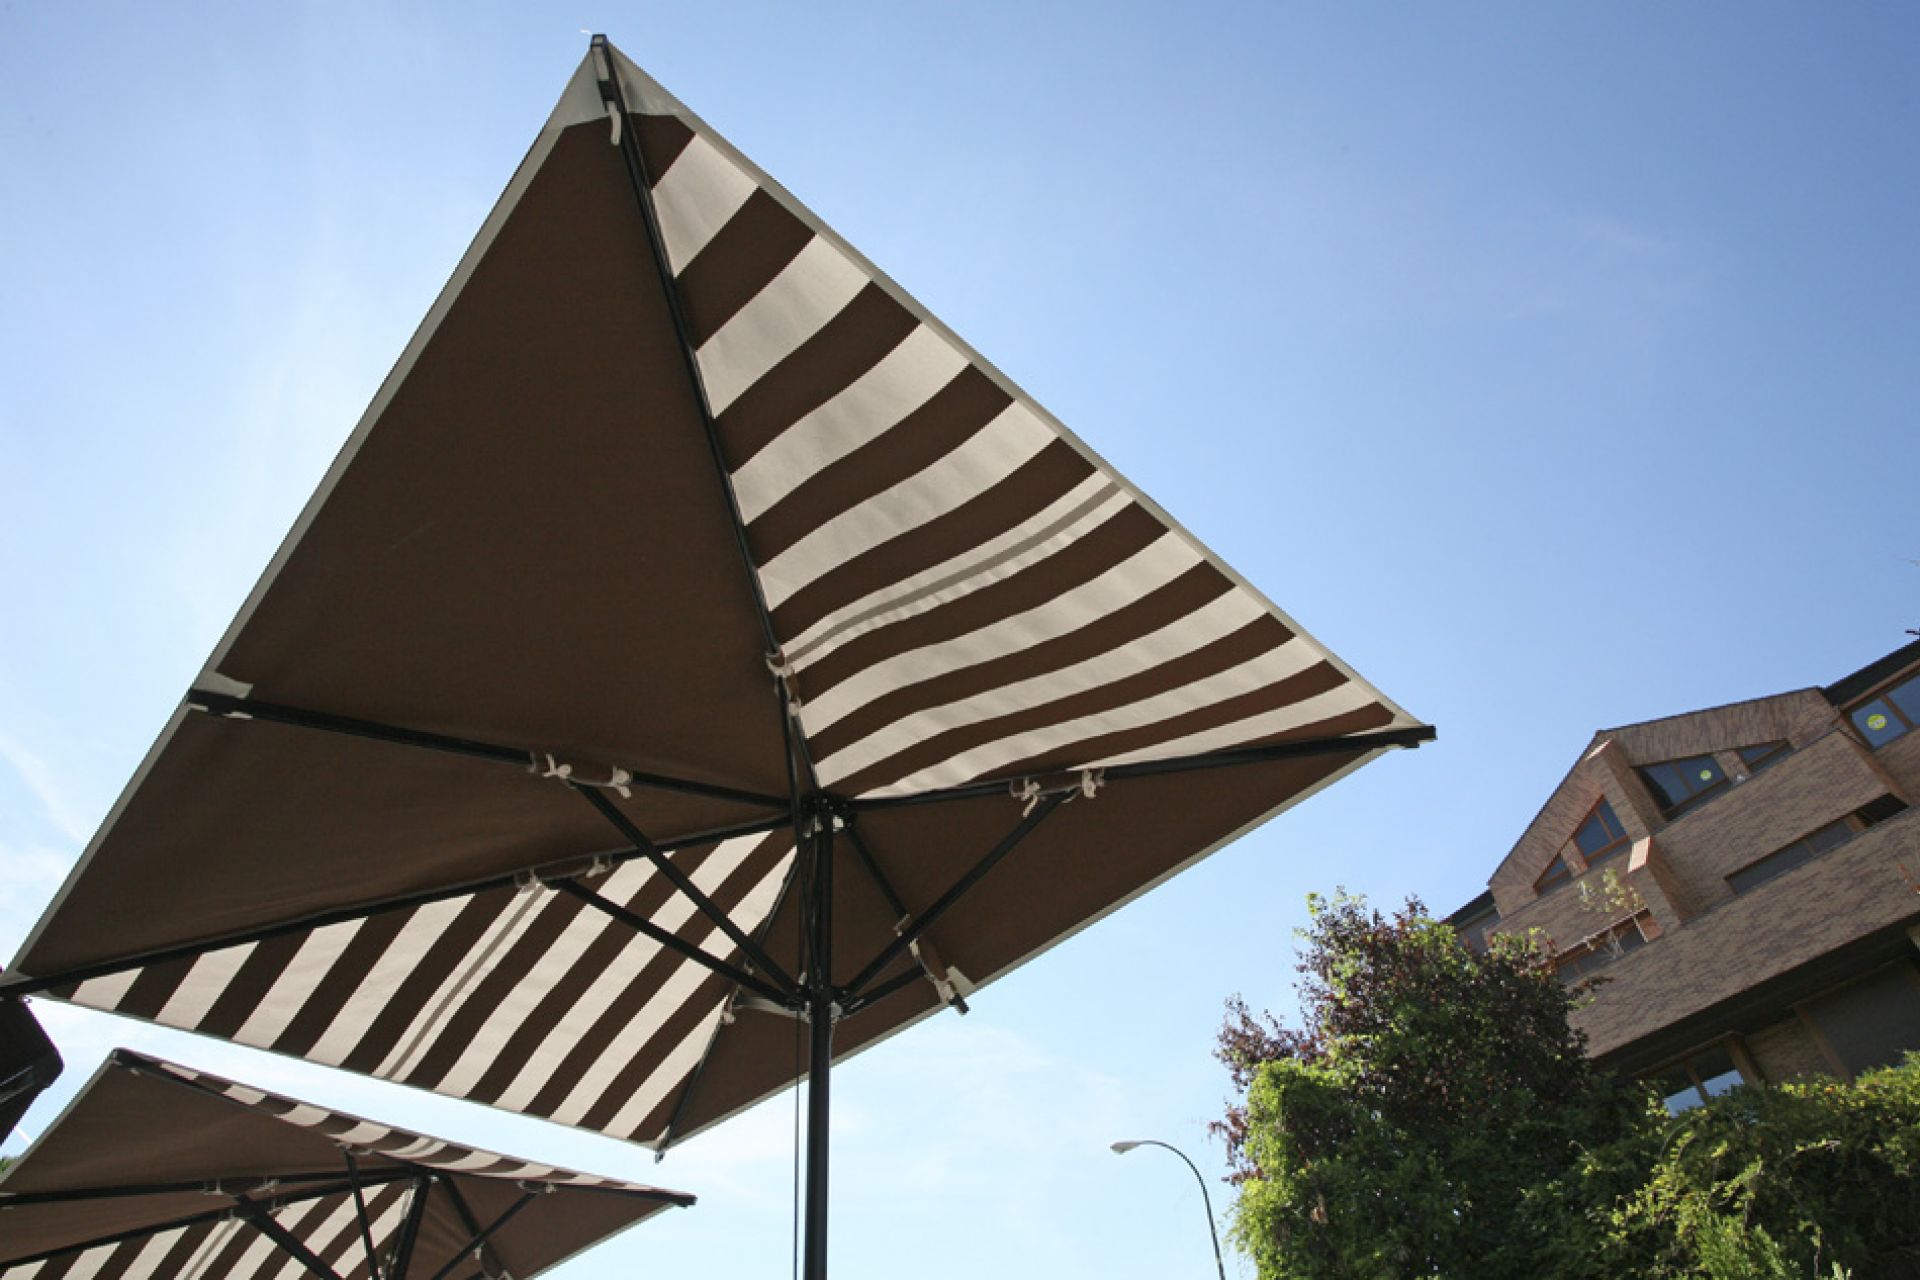 Bottom view of the Ibiza D parasol